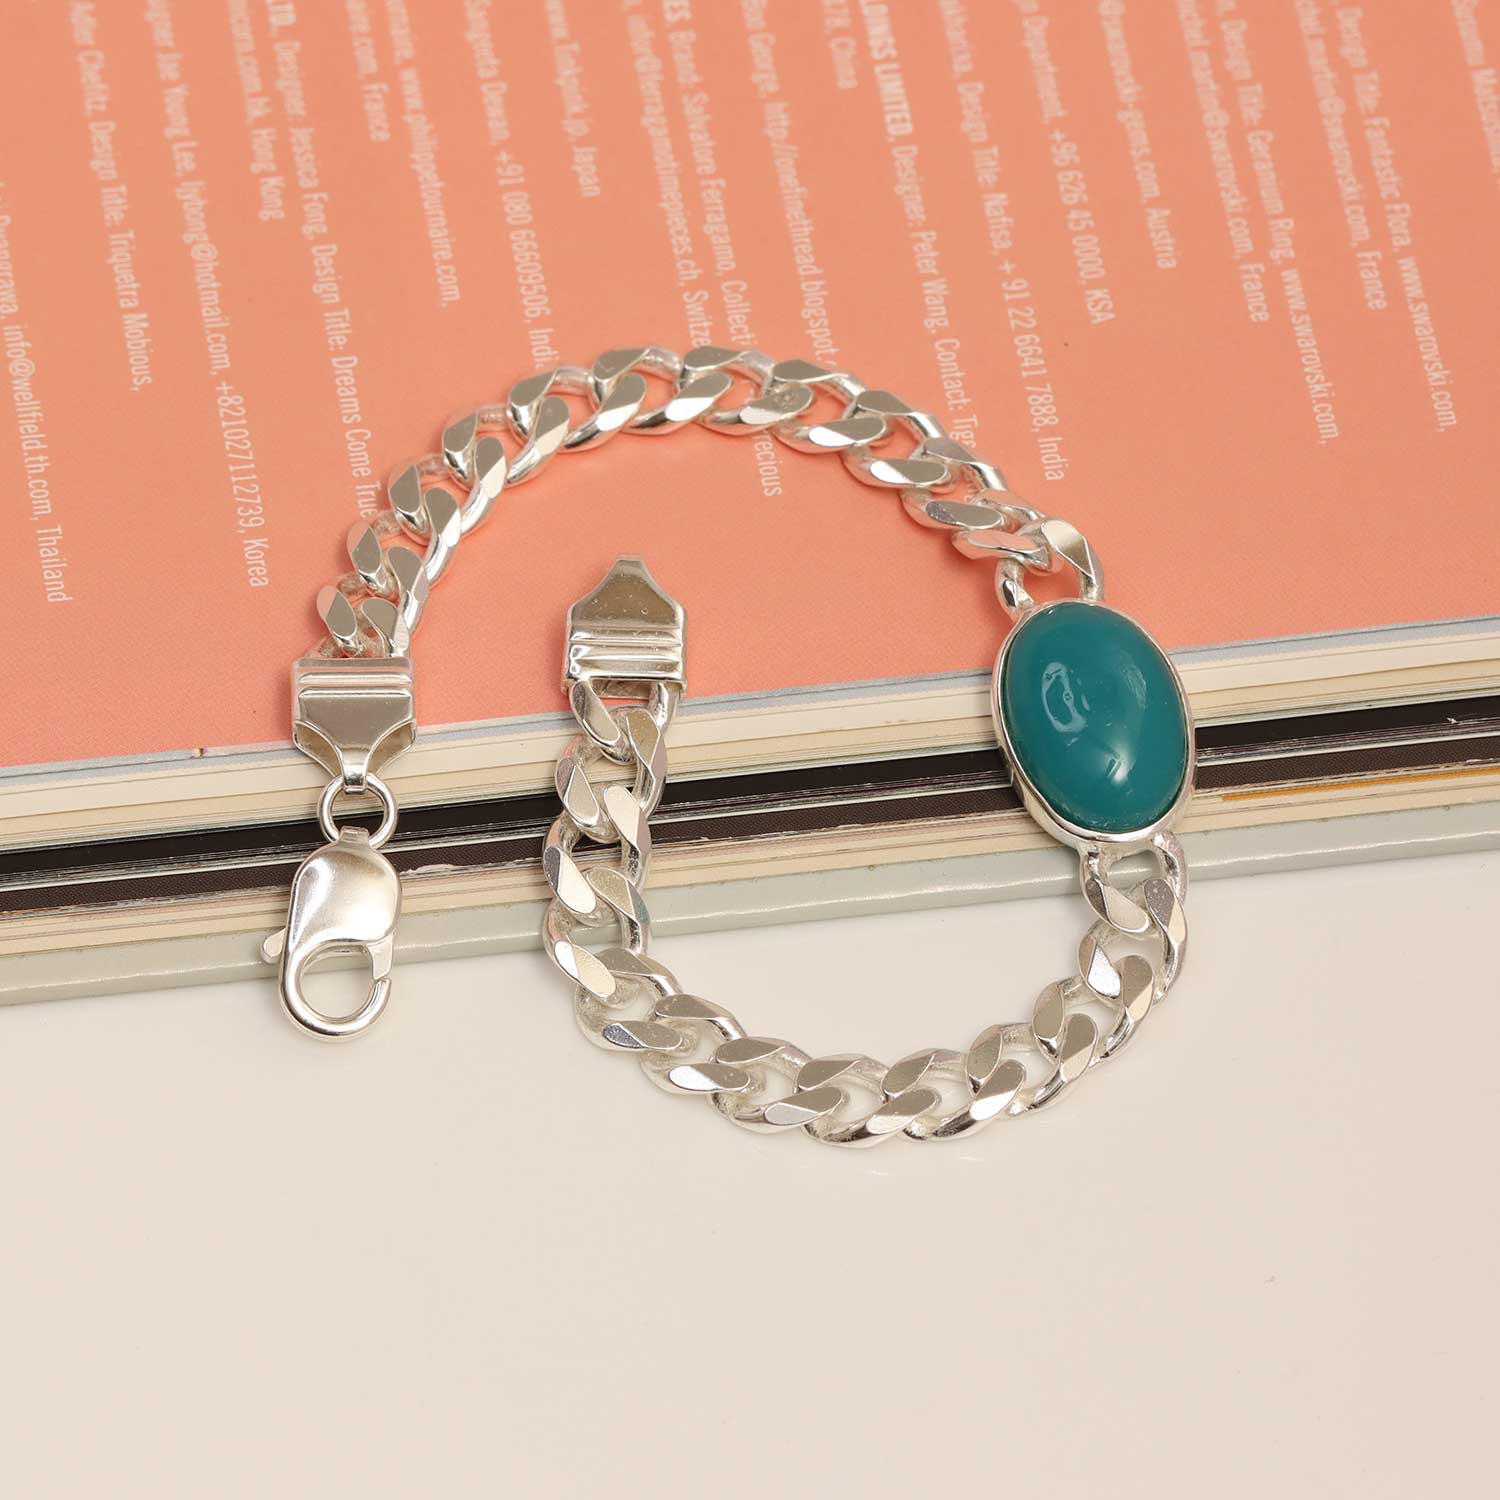 925 Sterling Silver Curb Chain Turquoise Stone Salman Khan Bracelet for Men's